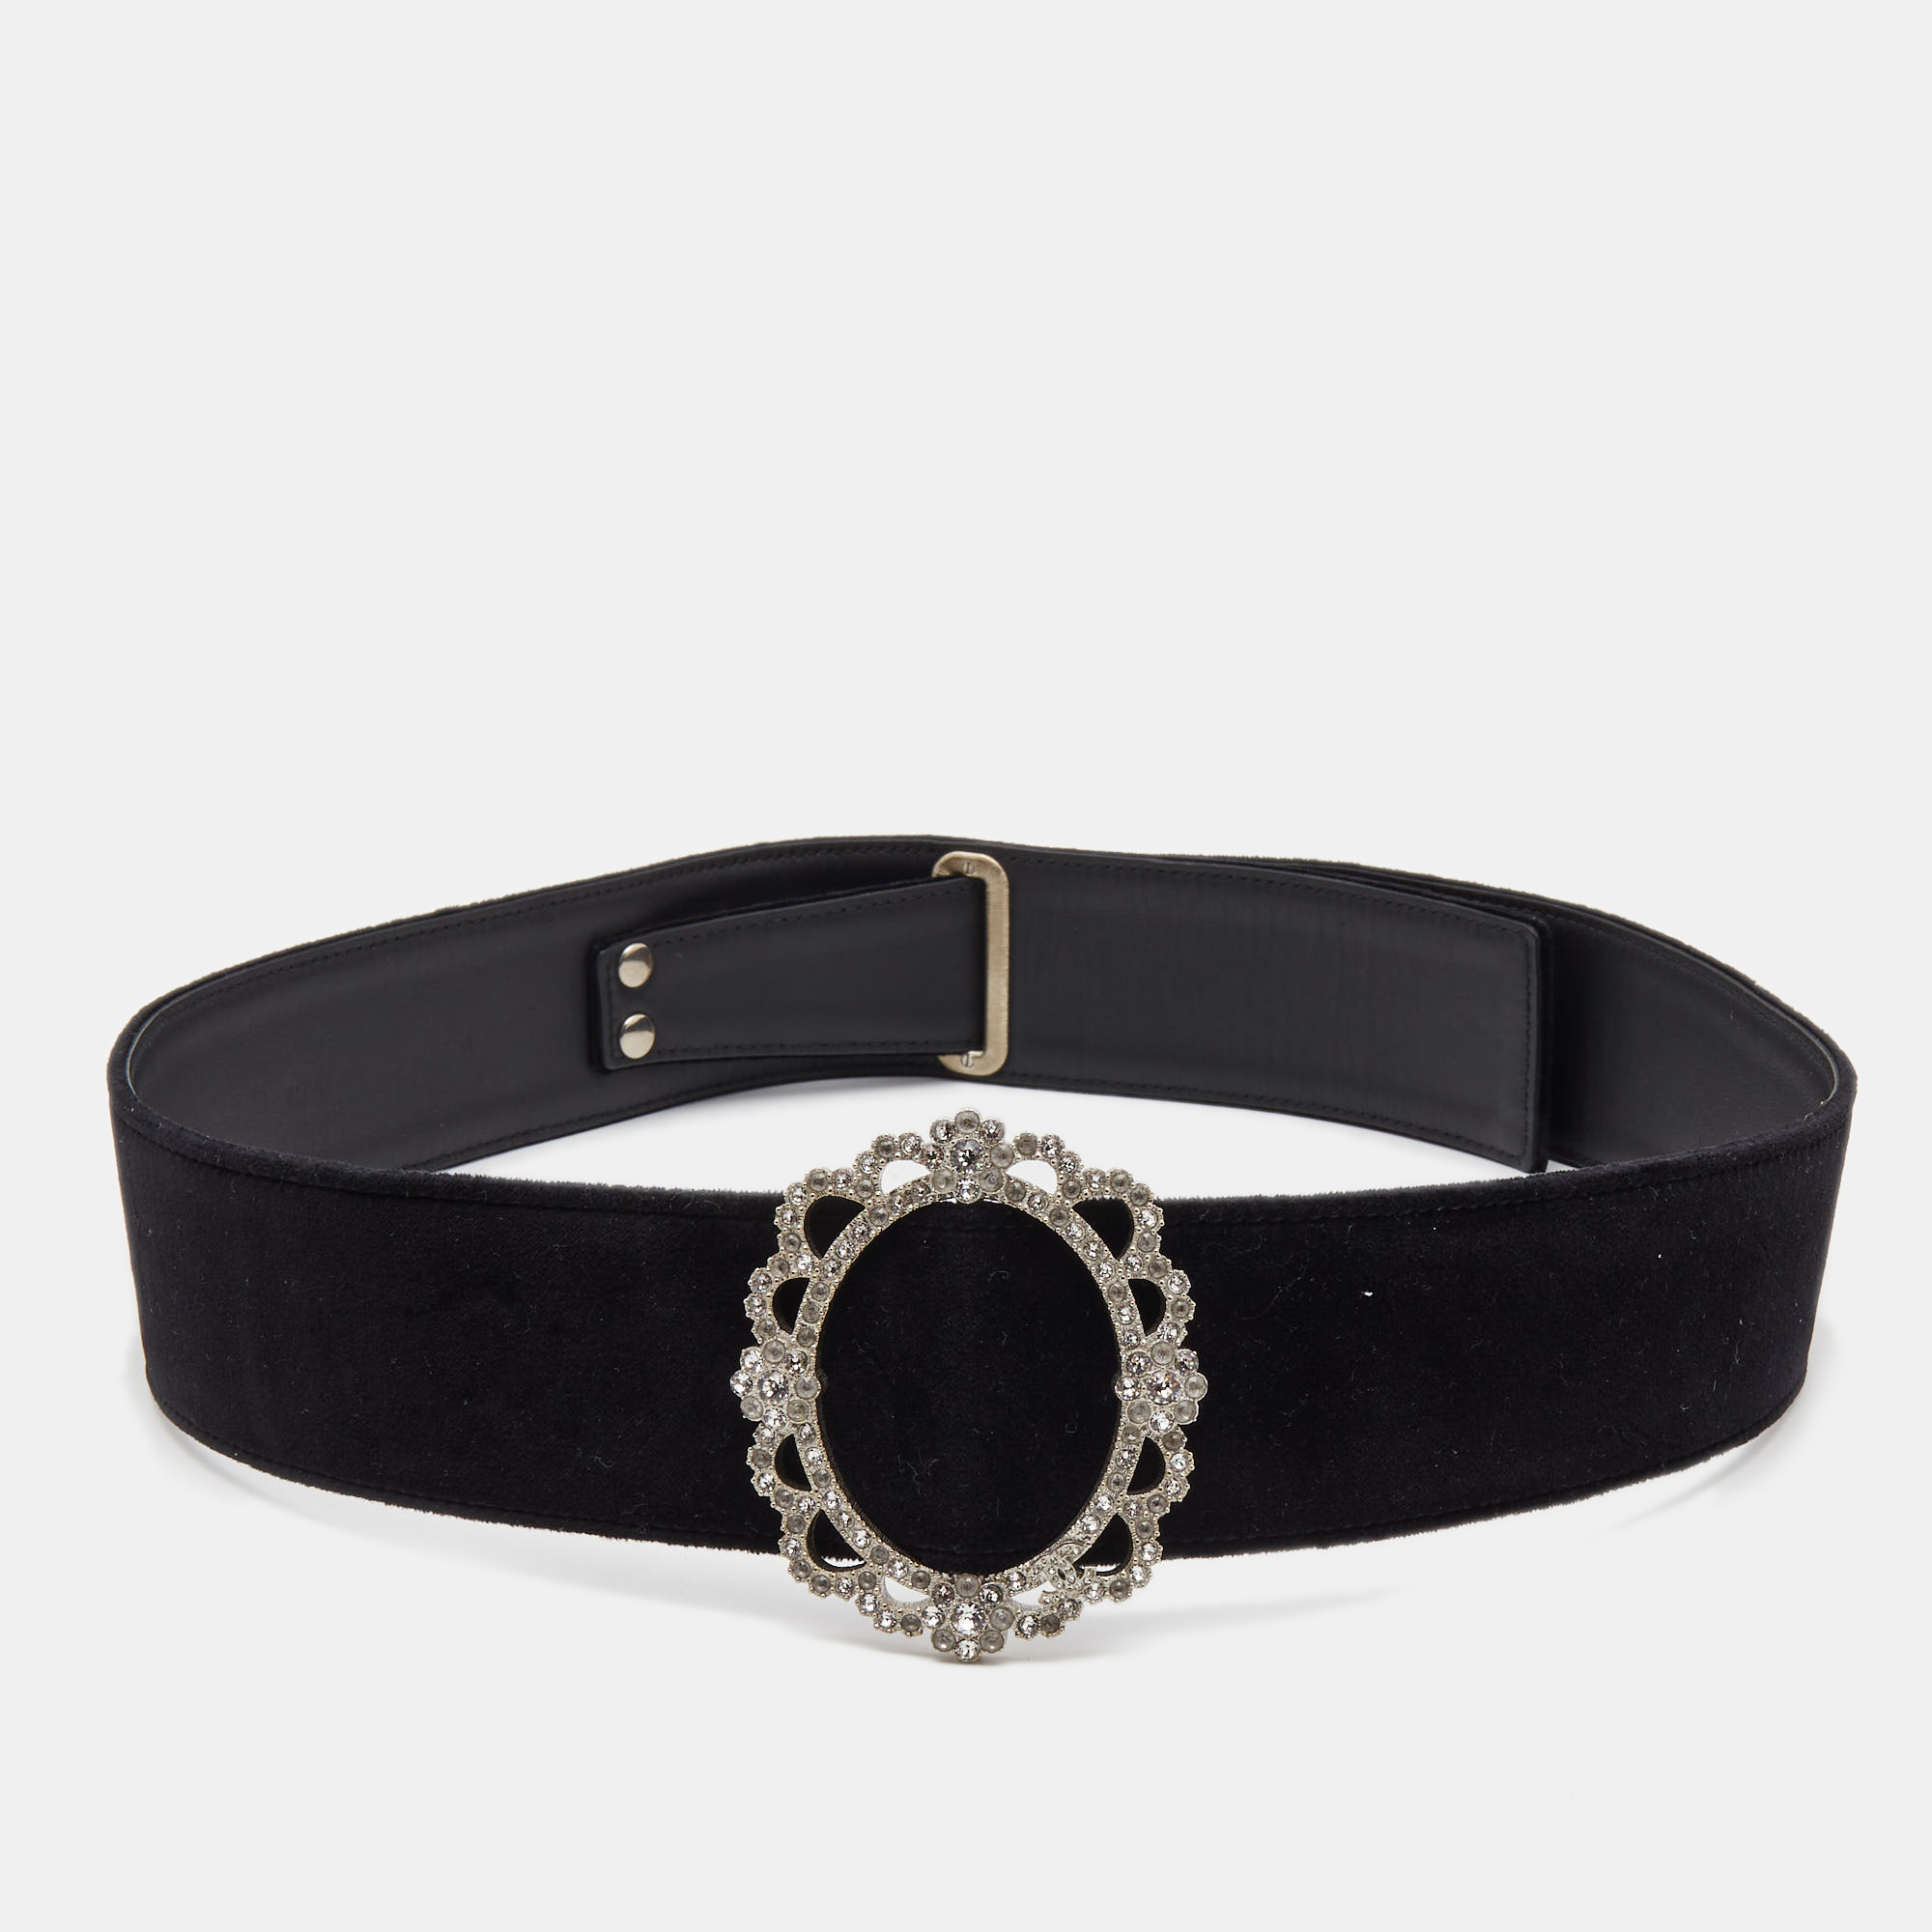 Chanel black velvet and leather crystals round buckle waist belt 90cm